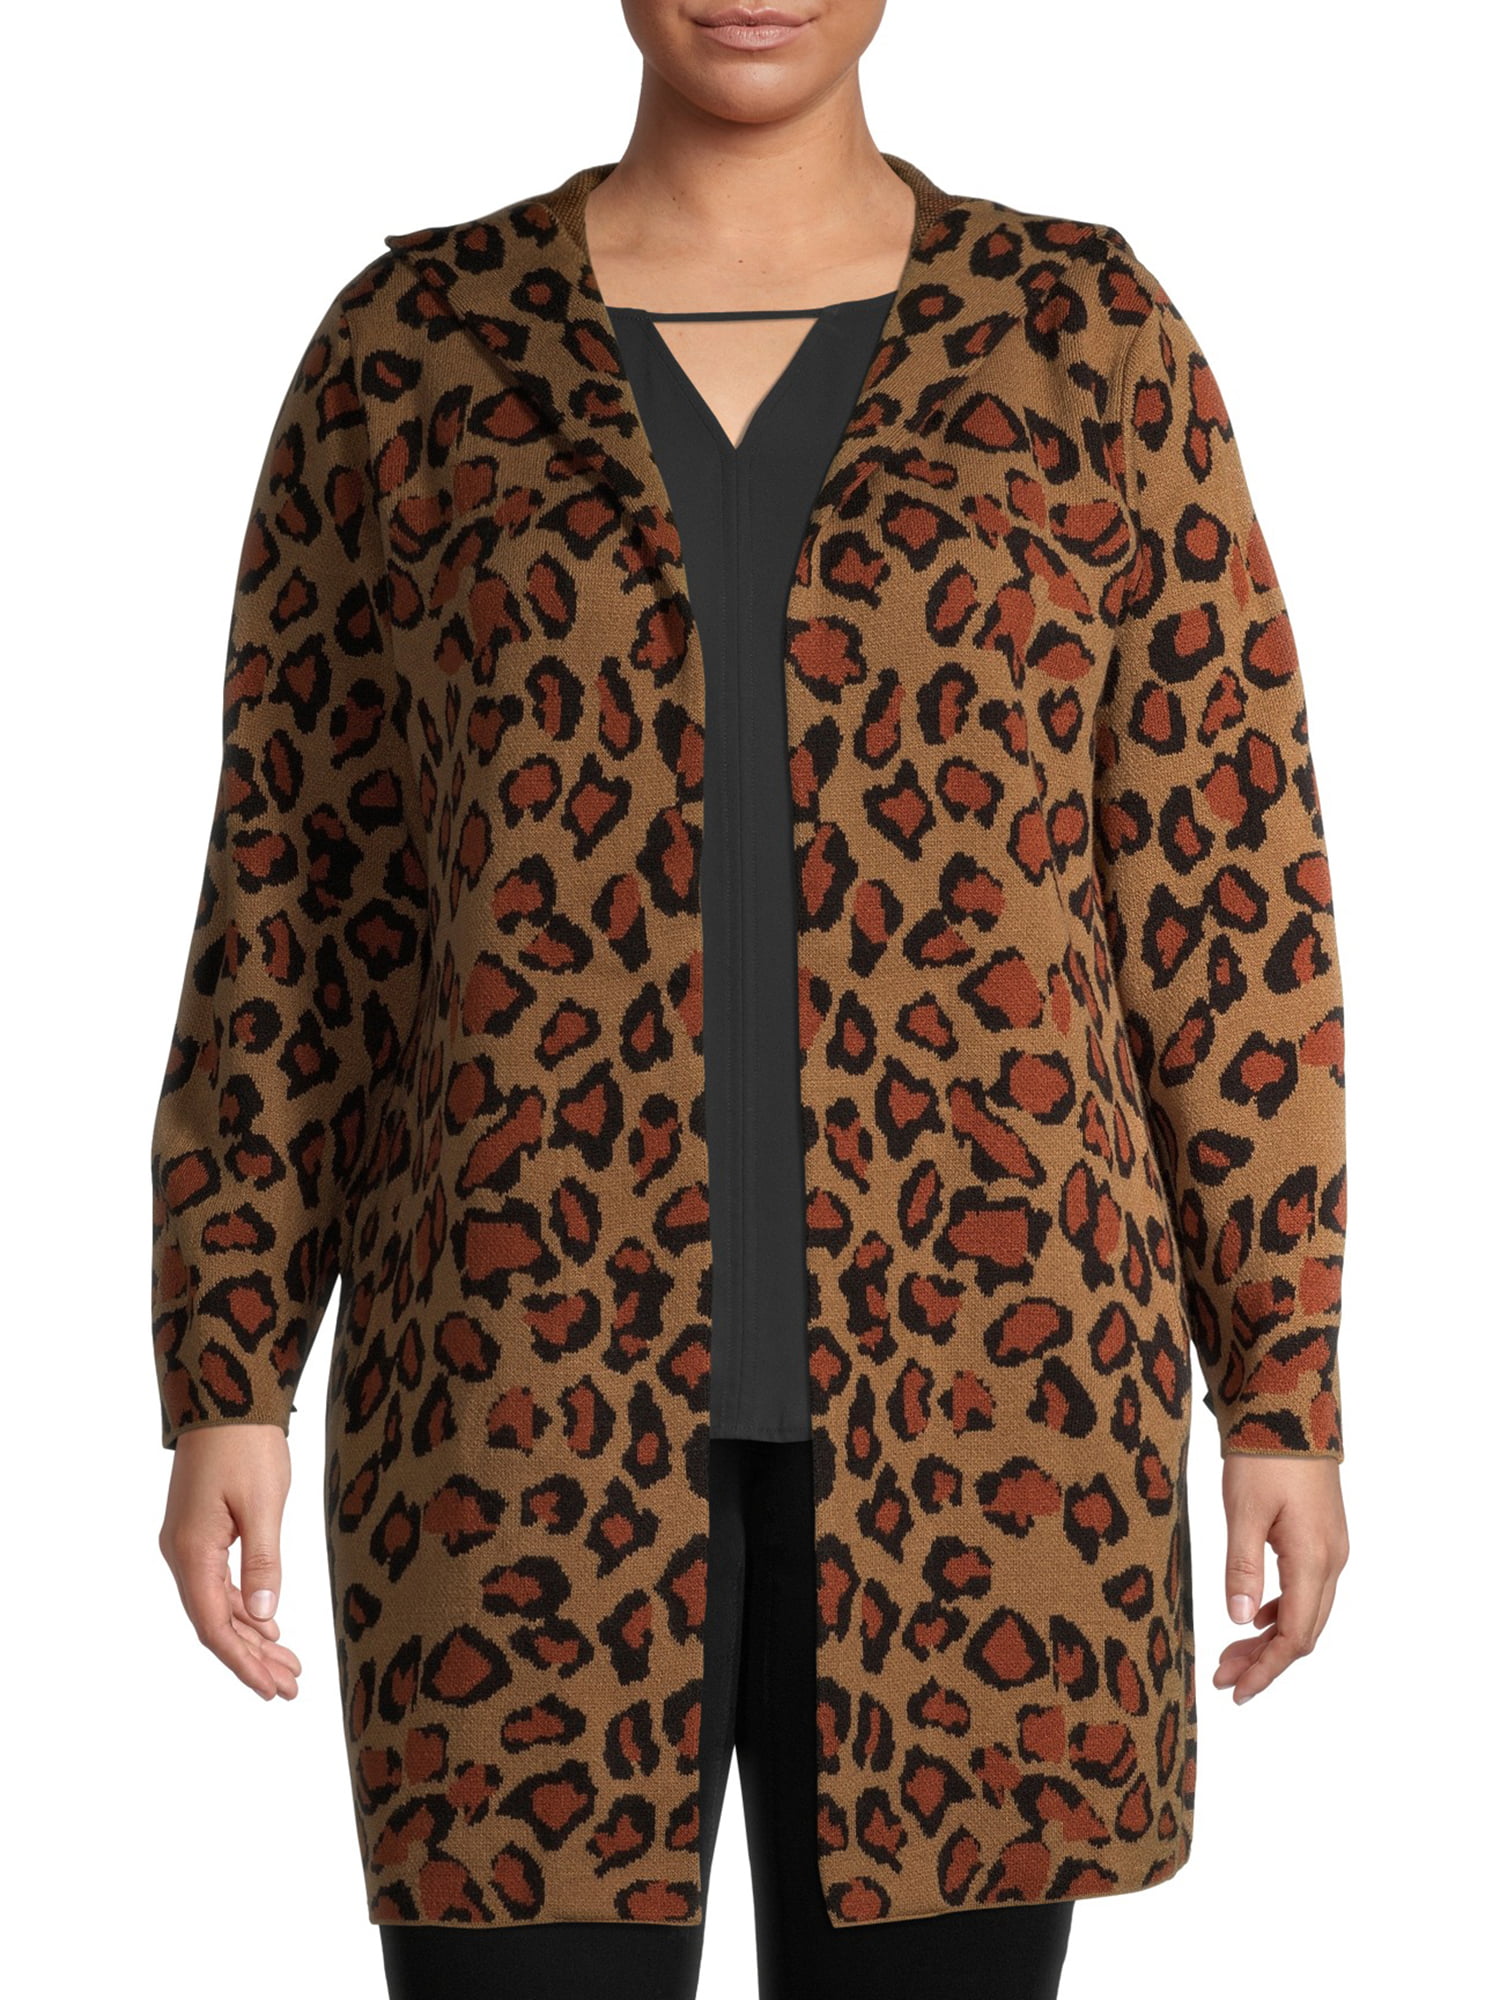 Terra & Sky Women's Plus Size Leopard Jacquard Duster Cardigan 